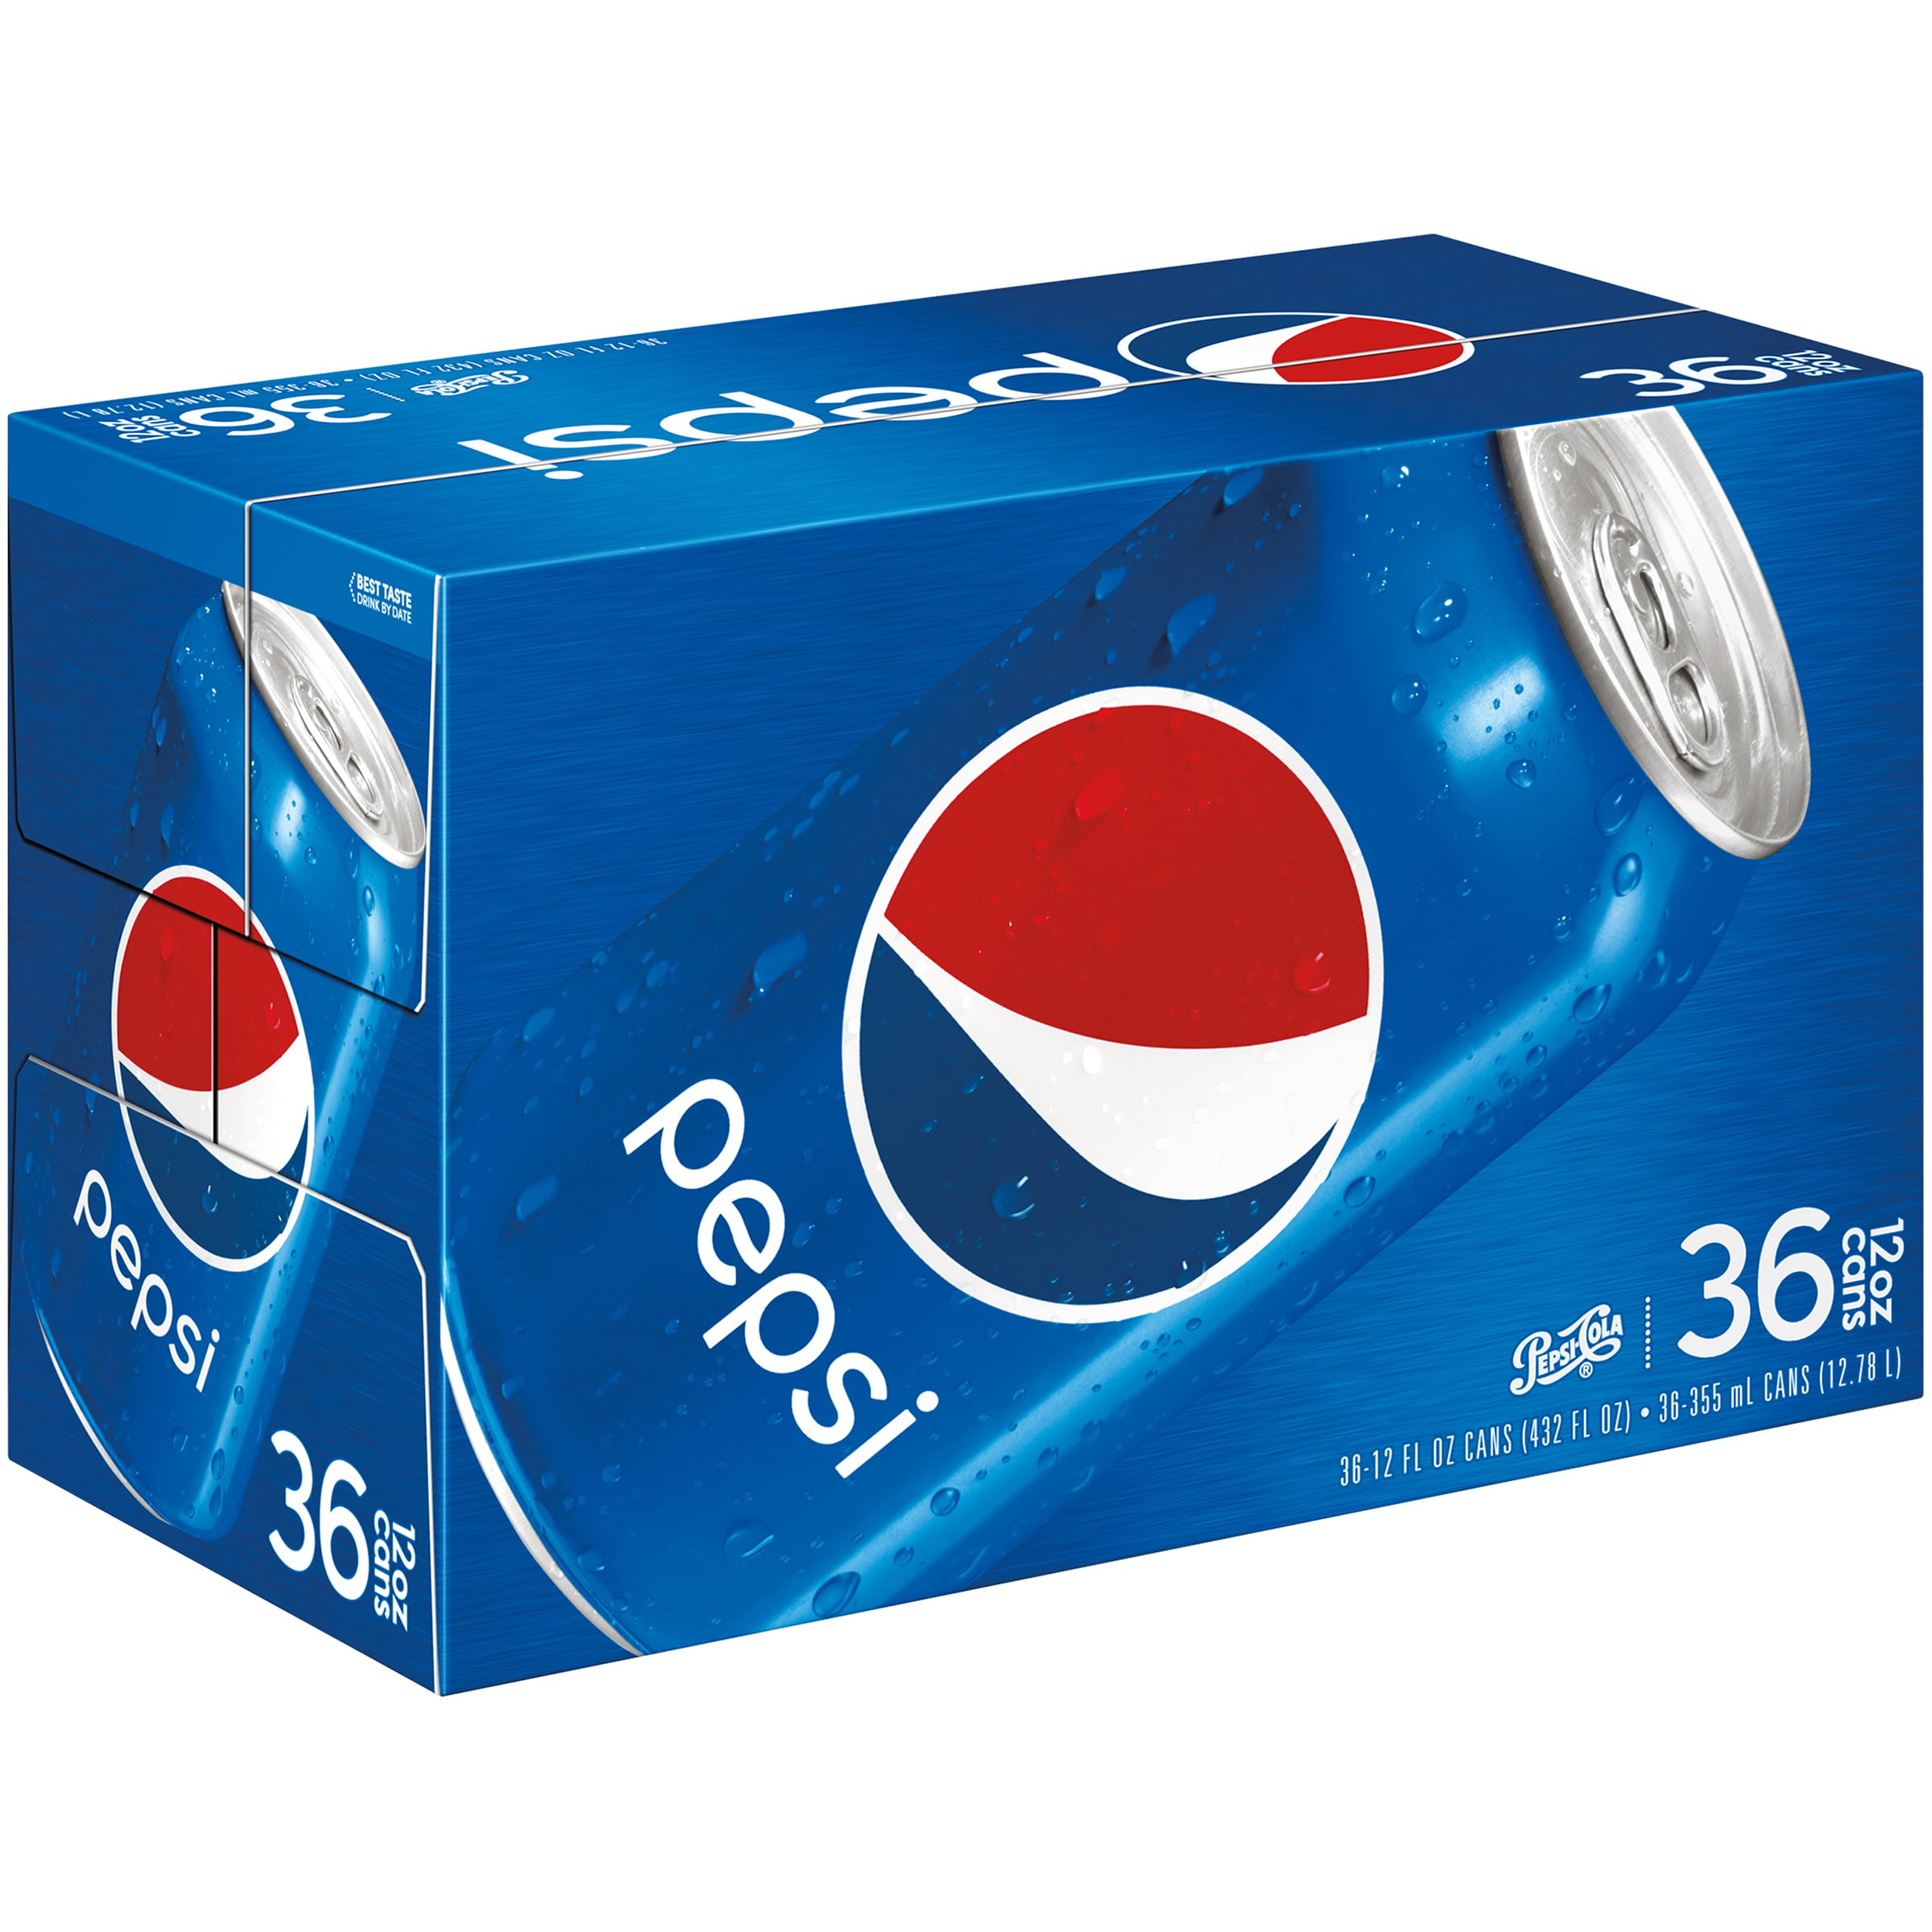 Pepsi, 12 Fl Oz, 36 Ct - Walmart.com - Walmart.com